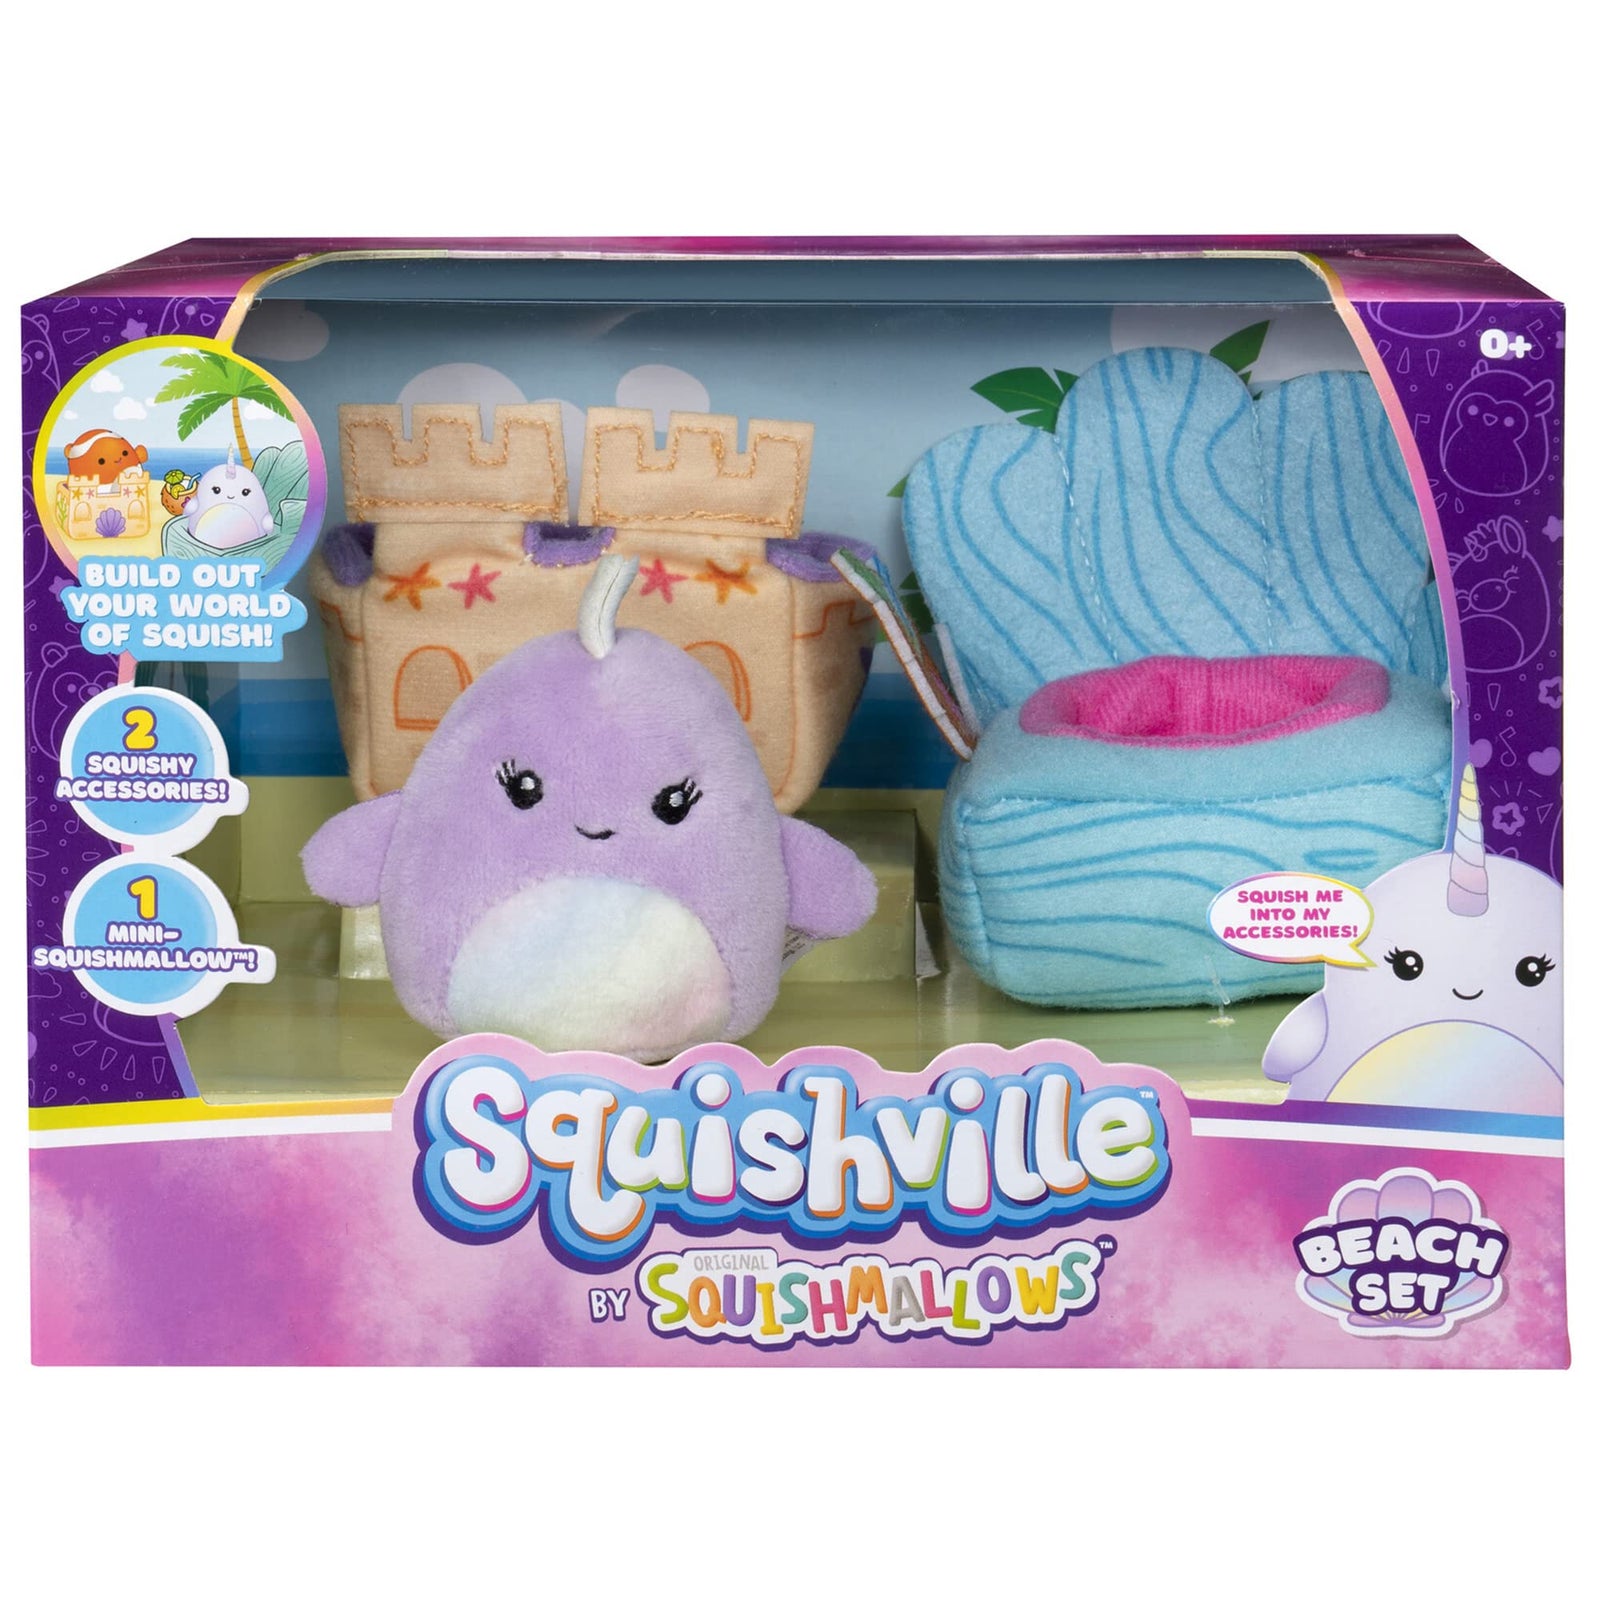 Squishville by Squishmallows Mini Plush Room Accessory Set, Camping, 2” Danny Soft Mini-Squishmallow and 2 Plush Accessories, Marshmallow-Soft Animals, Camping Toys